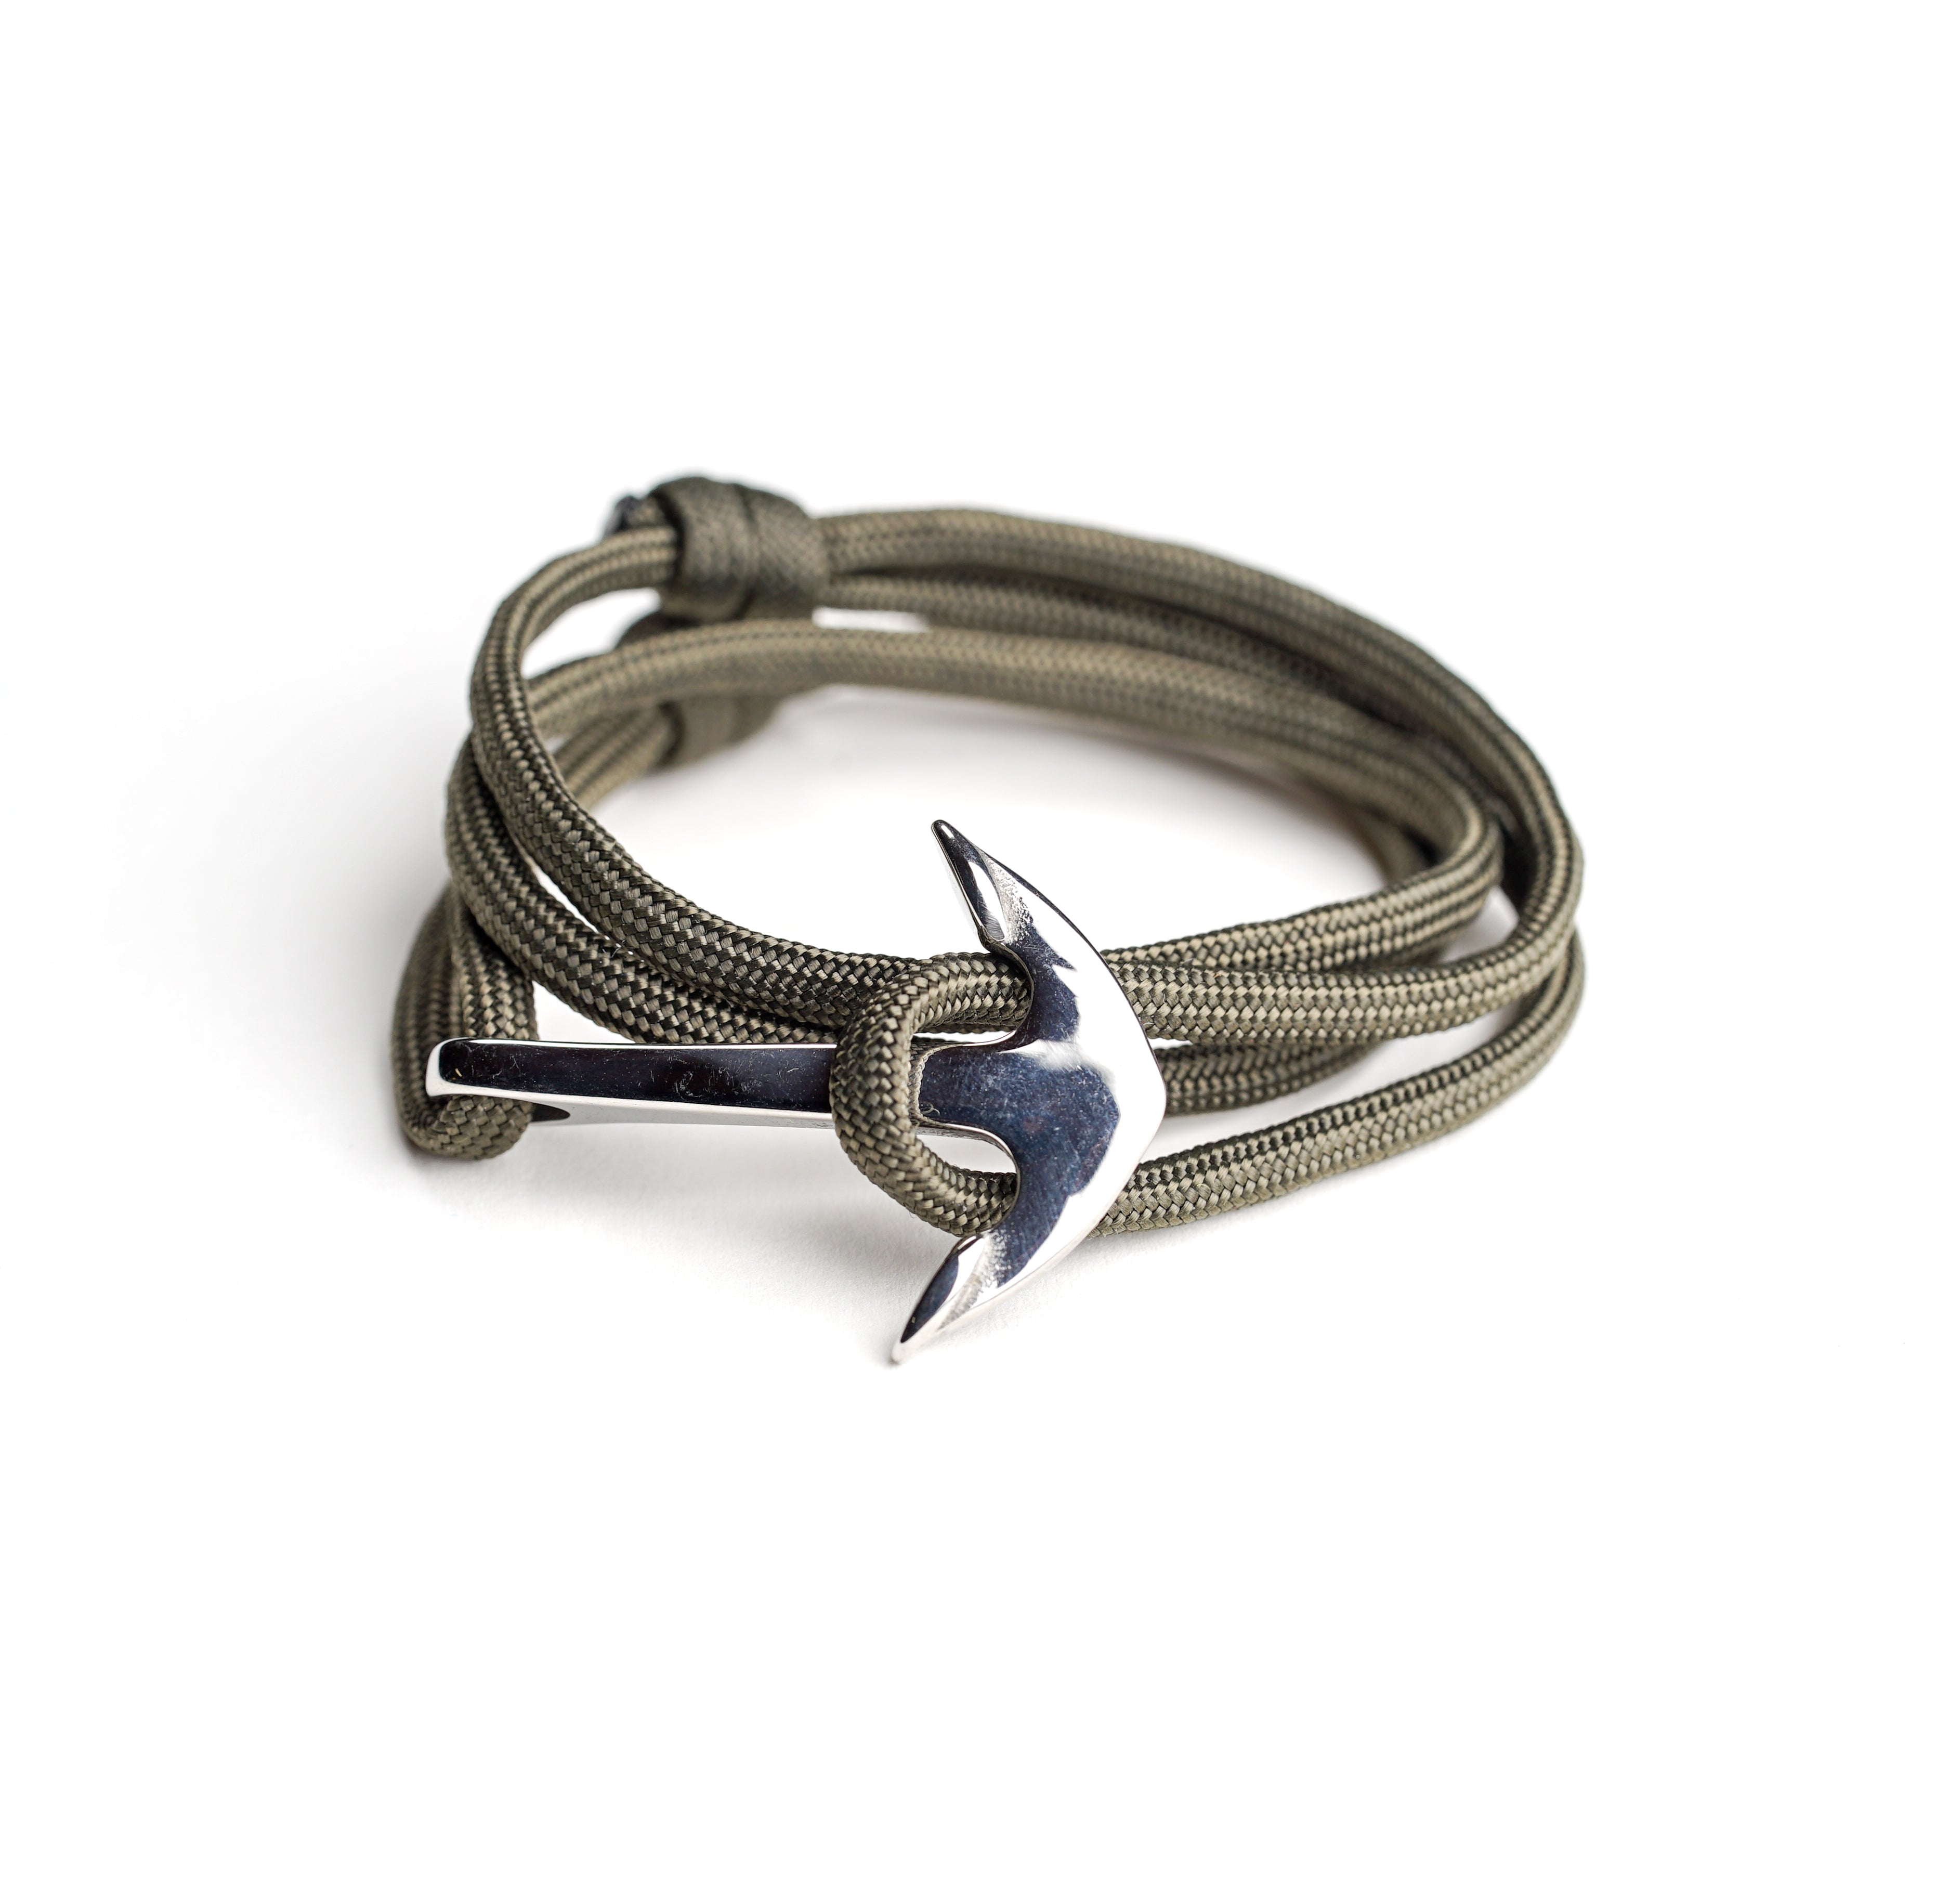 Fish Hook Bracelet, Army Green Beige Paracord Bracelet, Paracord